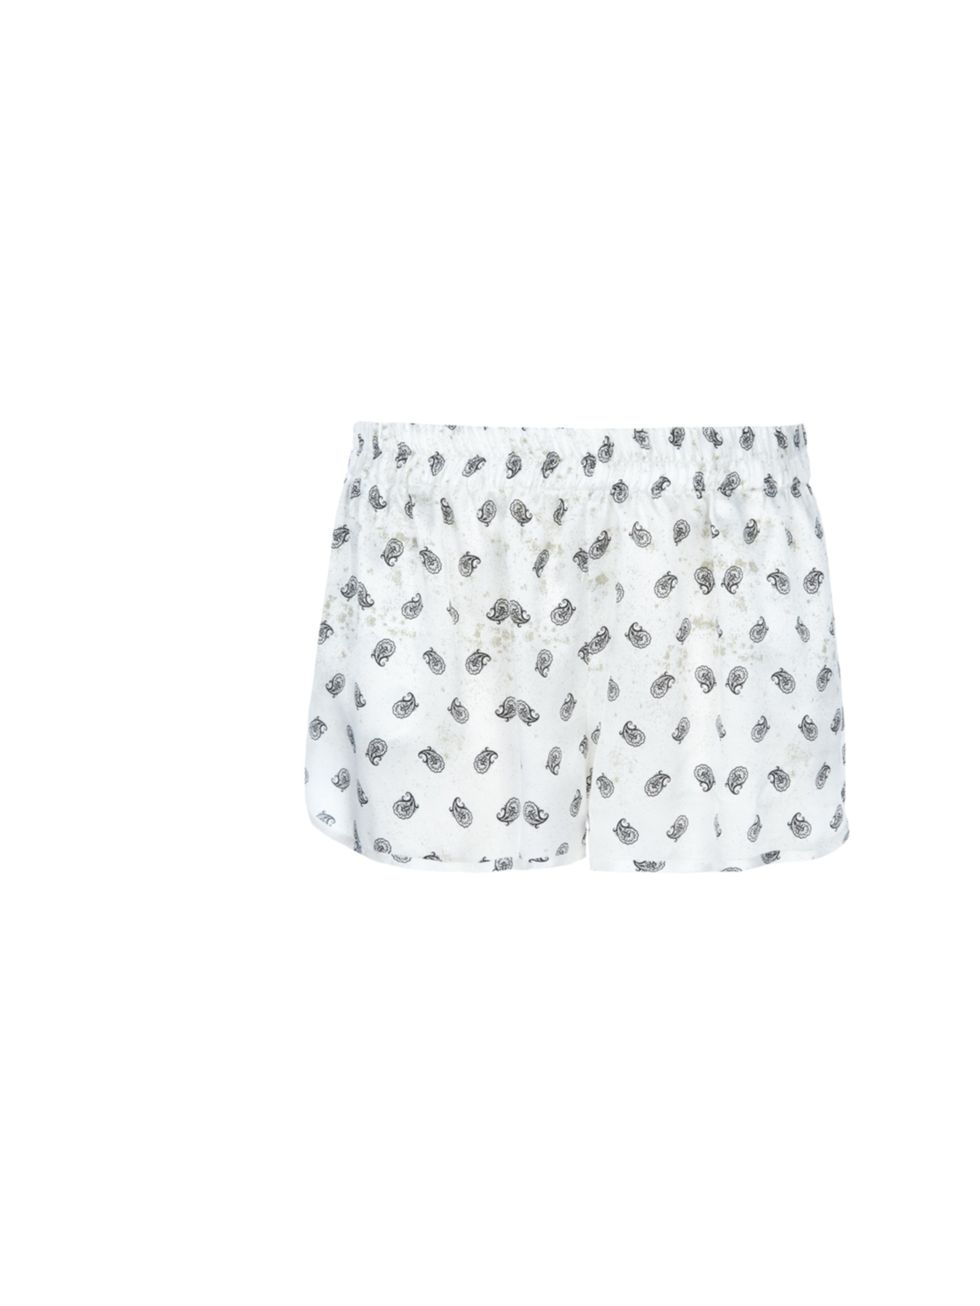 <p>Pierre Balmain paisley print shorts, £132, at <a href="http://www.farfetch.com/shopping/women/search/schid-62616c6d61696e/items.aspx?q=balmain">Farfetch</a></p>